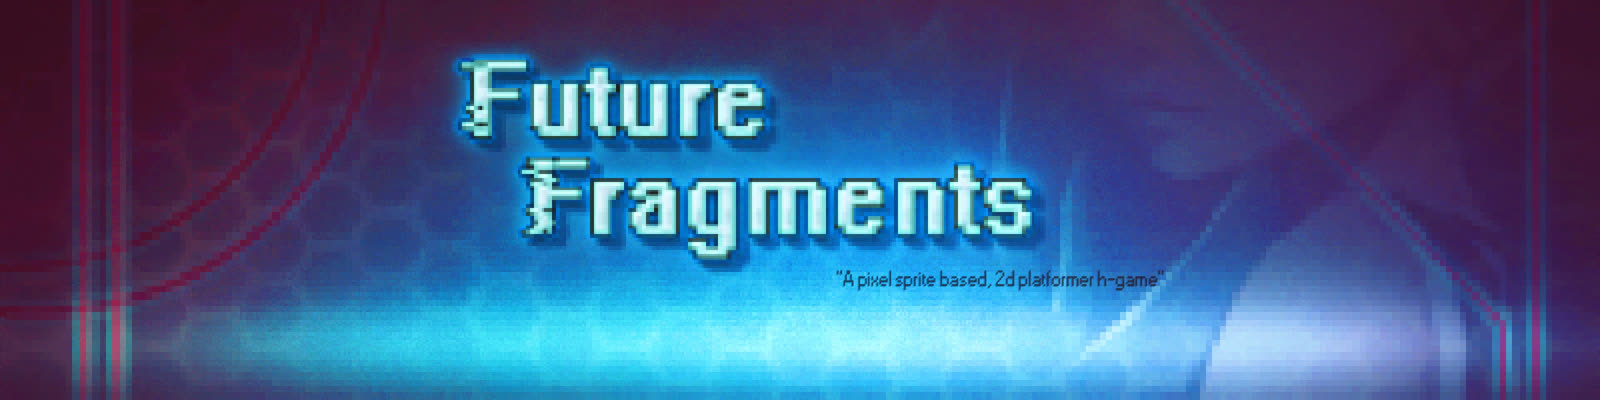 future fragments v016 download